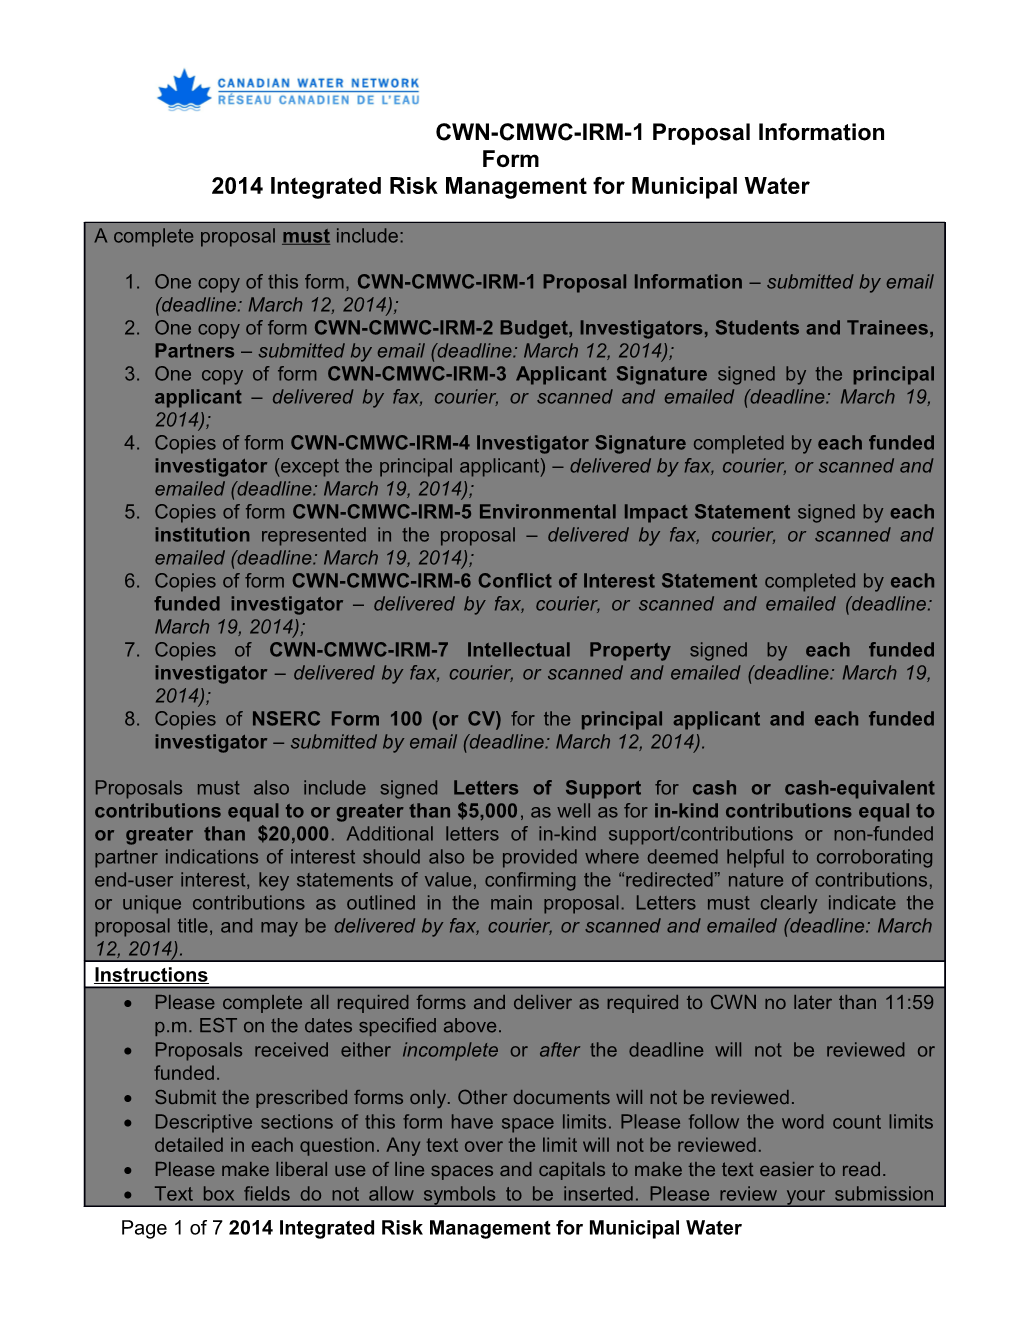 CWN-CMWC-IRM-1 Proposal Information Form